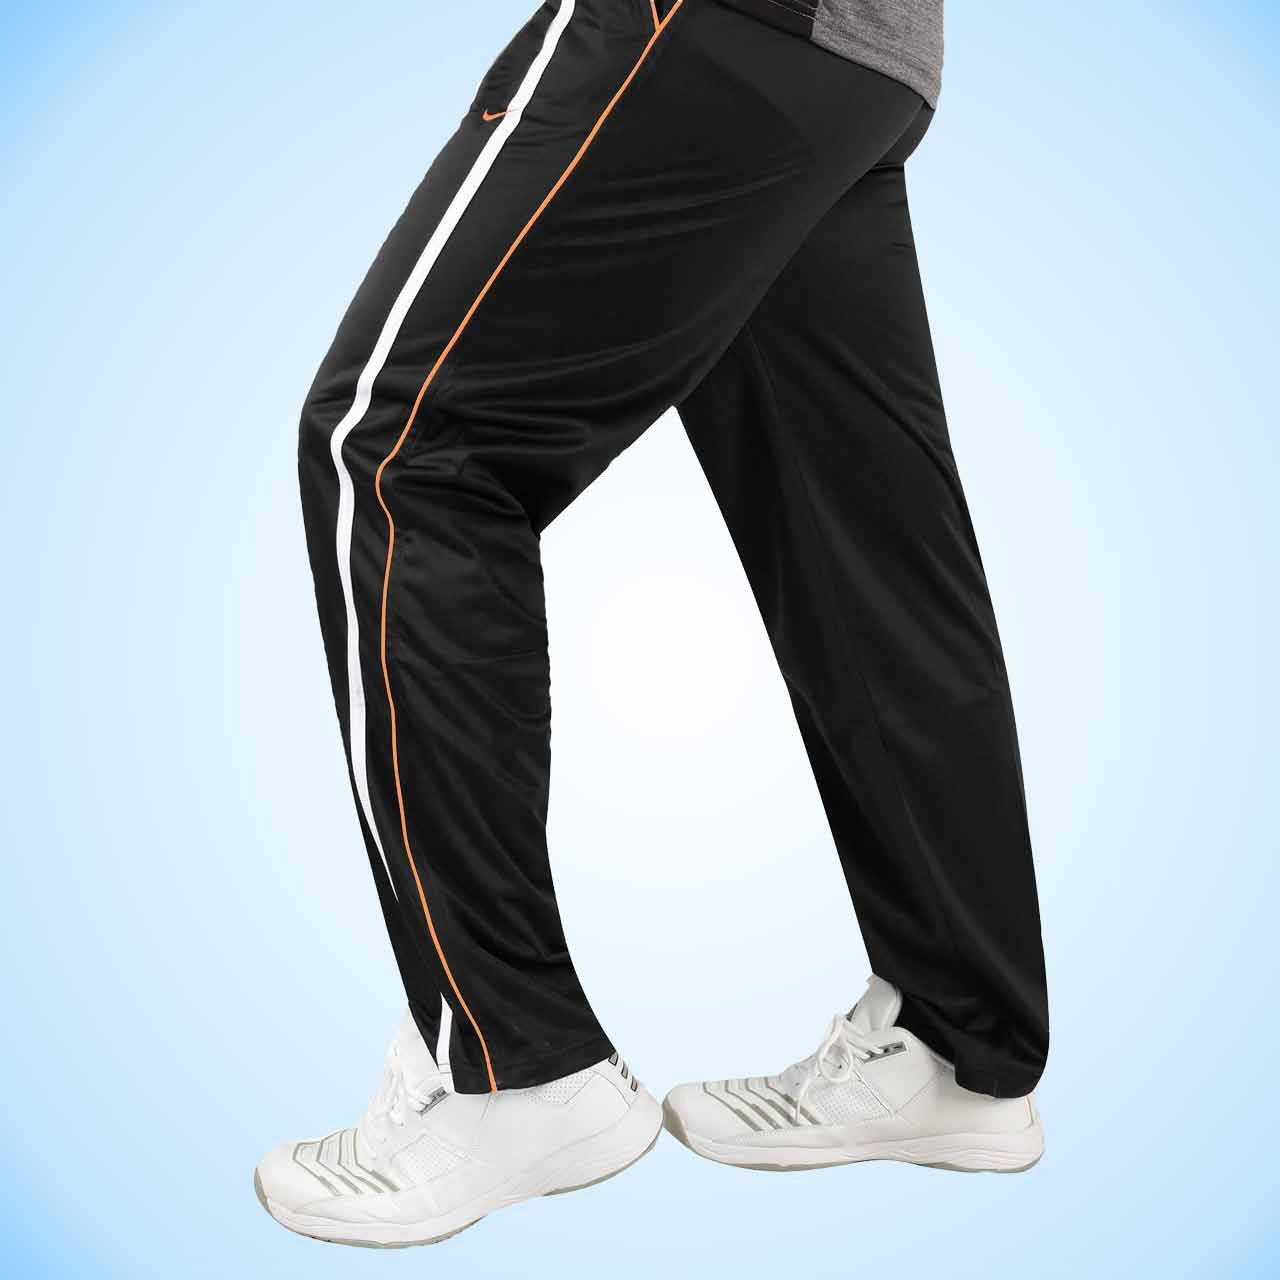 black trouser with orange strip by xtremesportswear PLUS 8000 TROUSER